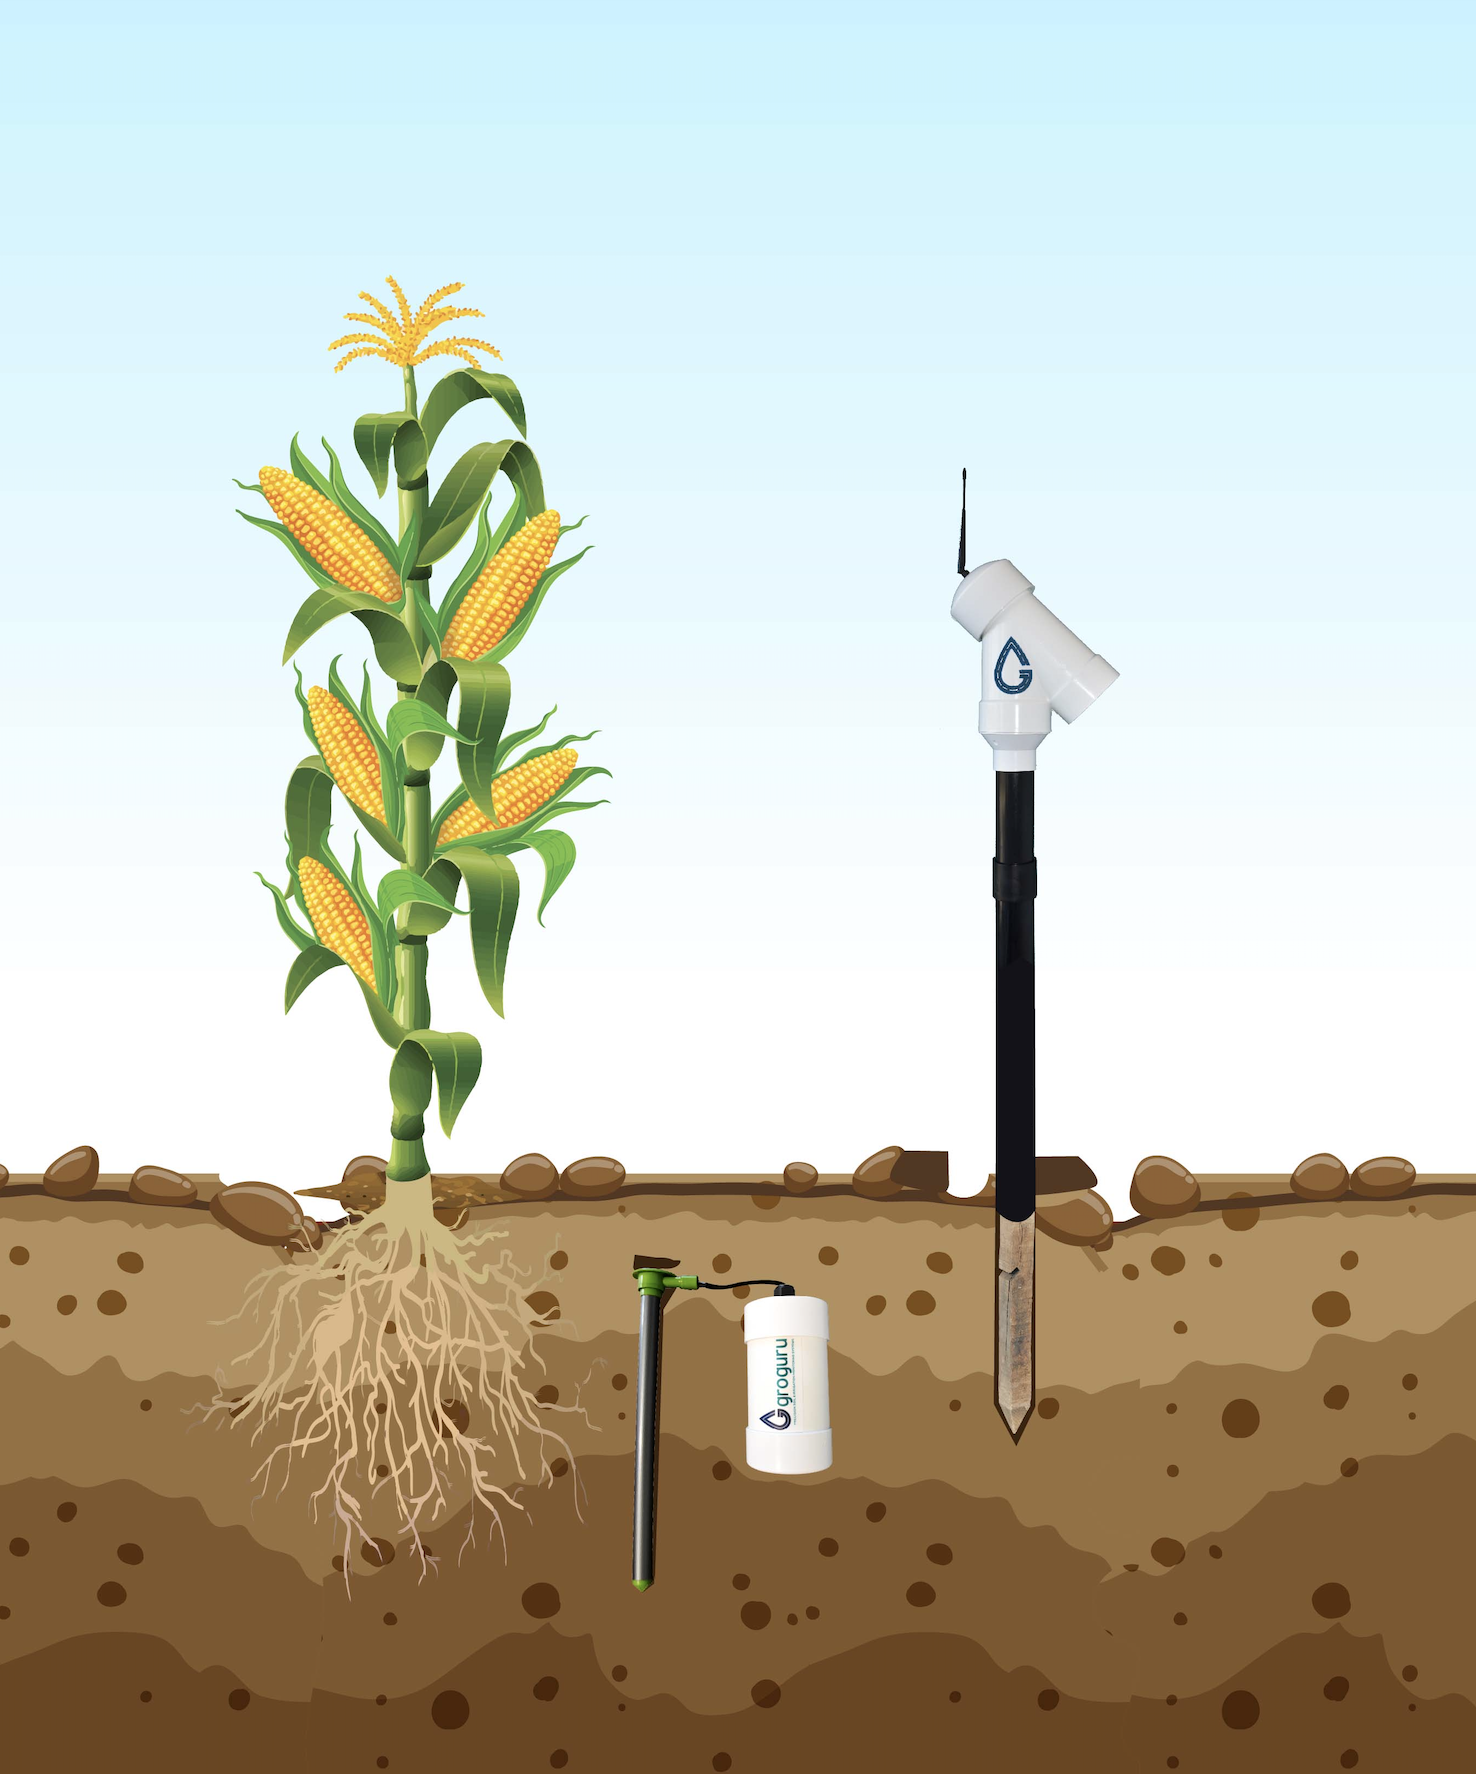 GroGuru Wireless Underground System (WUGS) Precision Soil Monitoring Solution